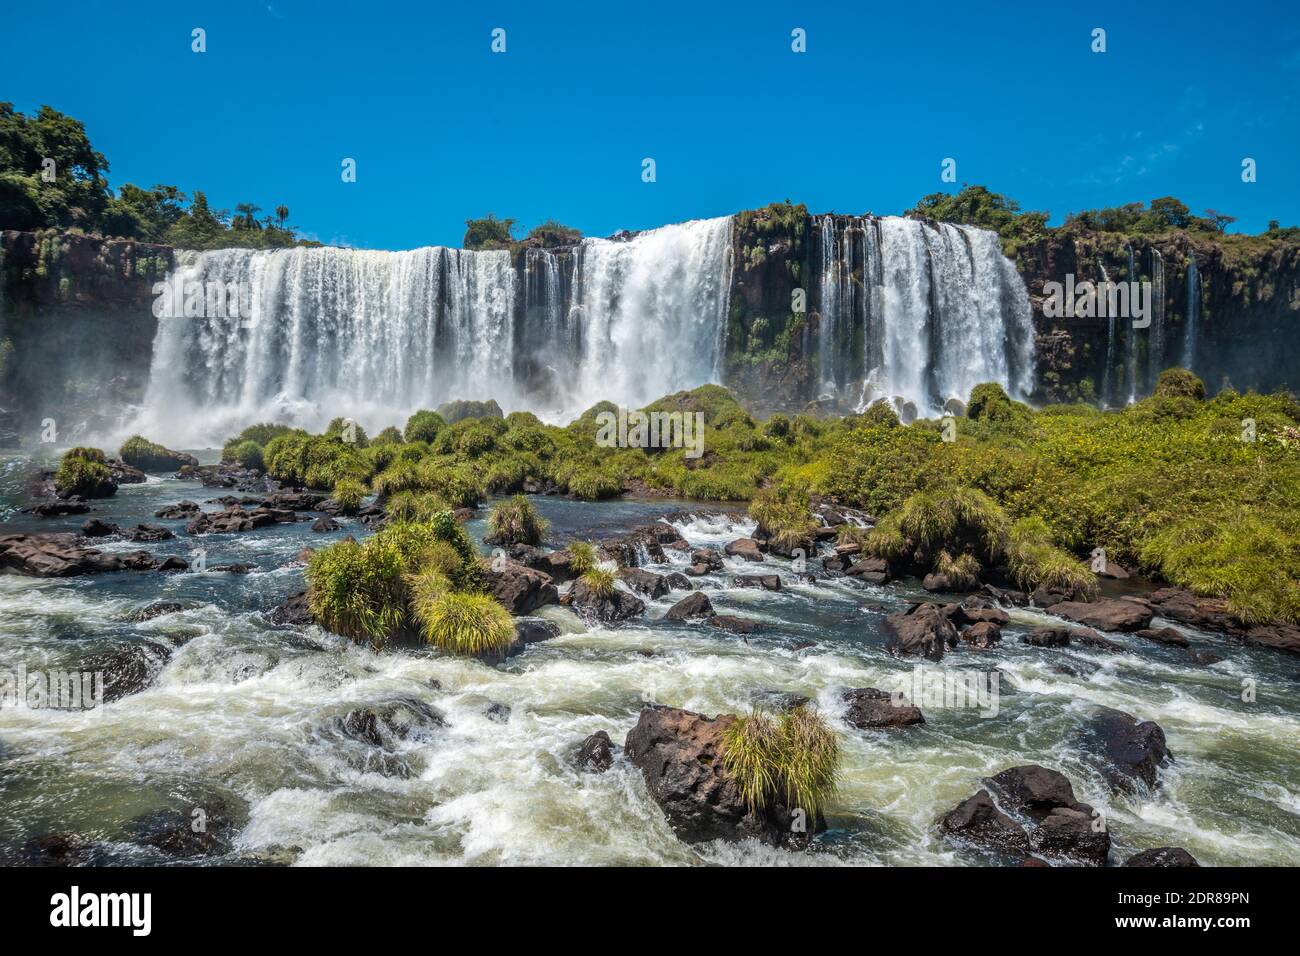 Iguazu falls Brazil side Stock Photo